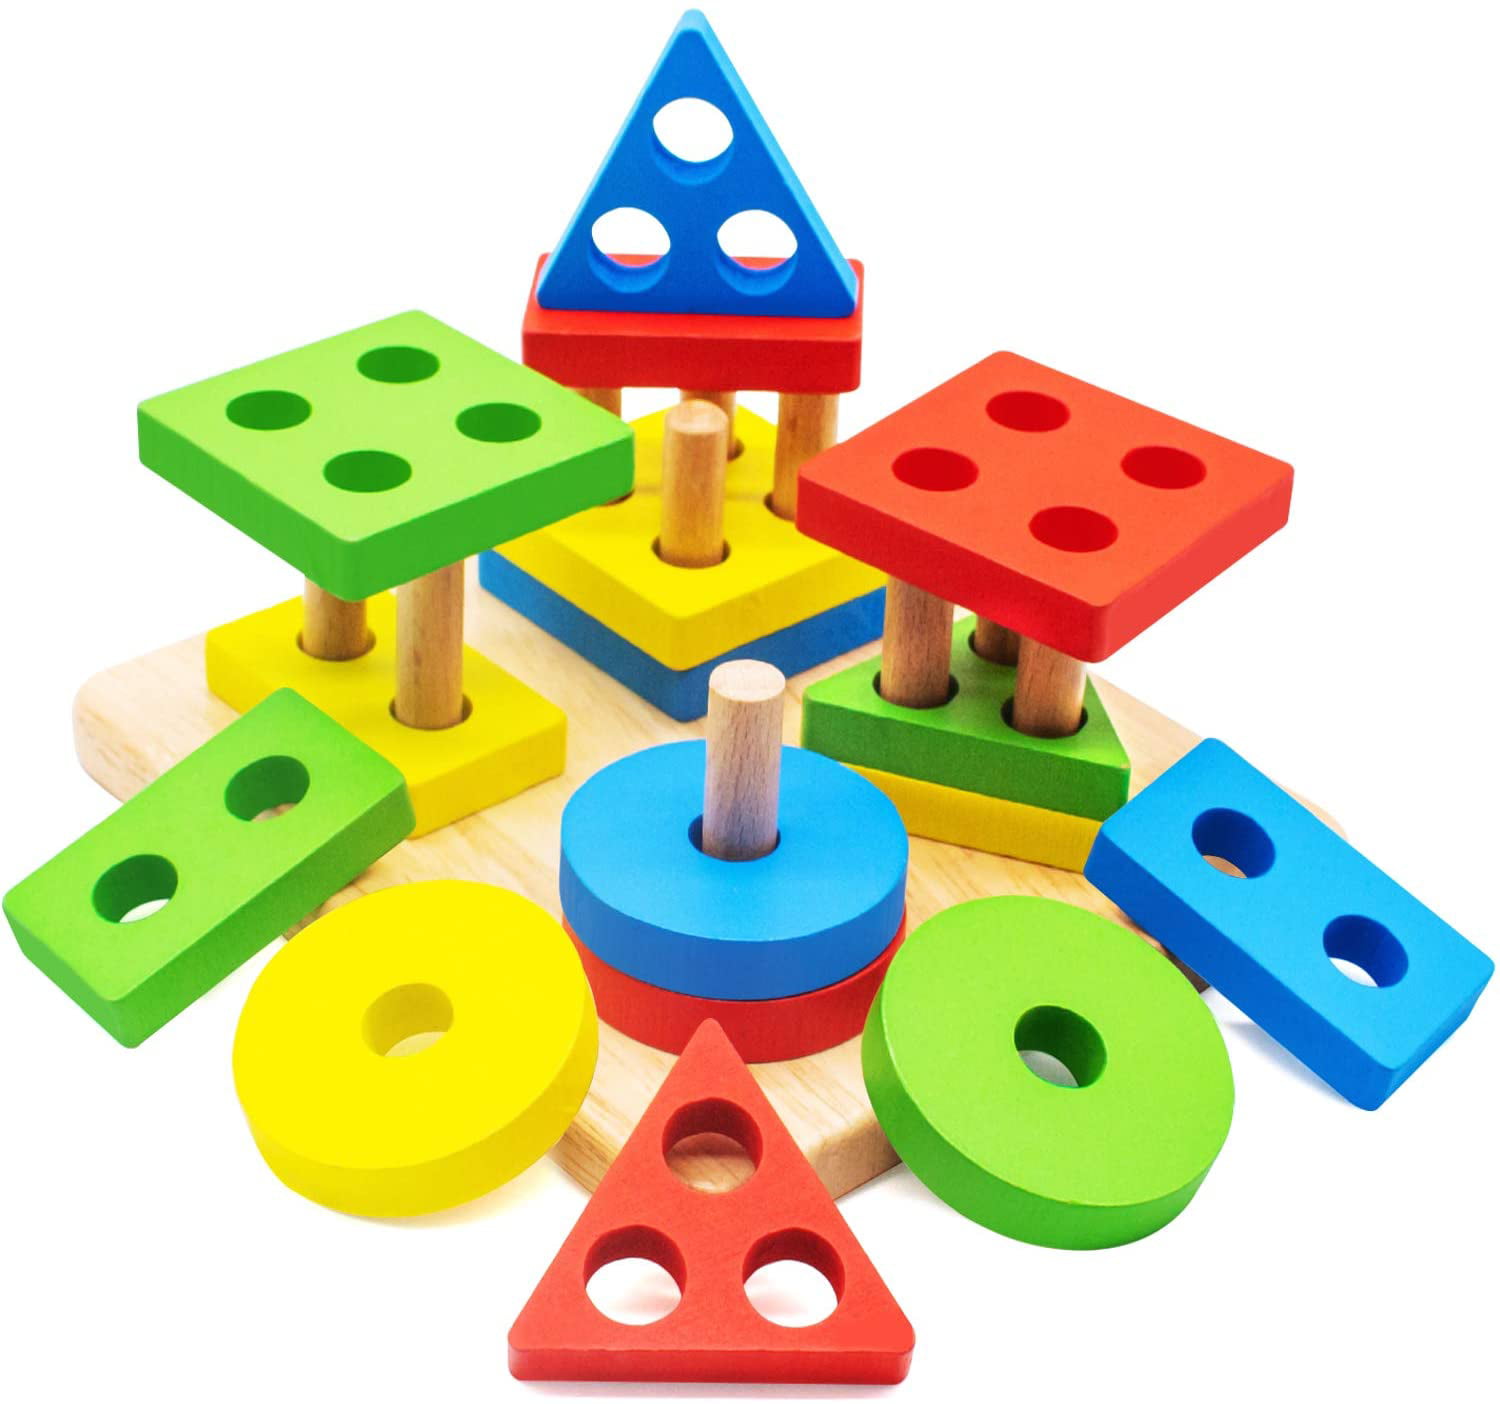 Preschool Teaching Aids Kids Montessori Geometry Block Puzzles Stacking Toys 